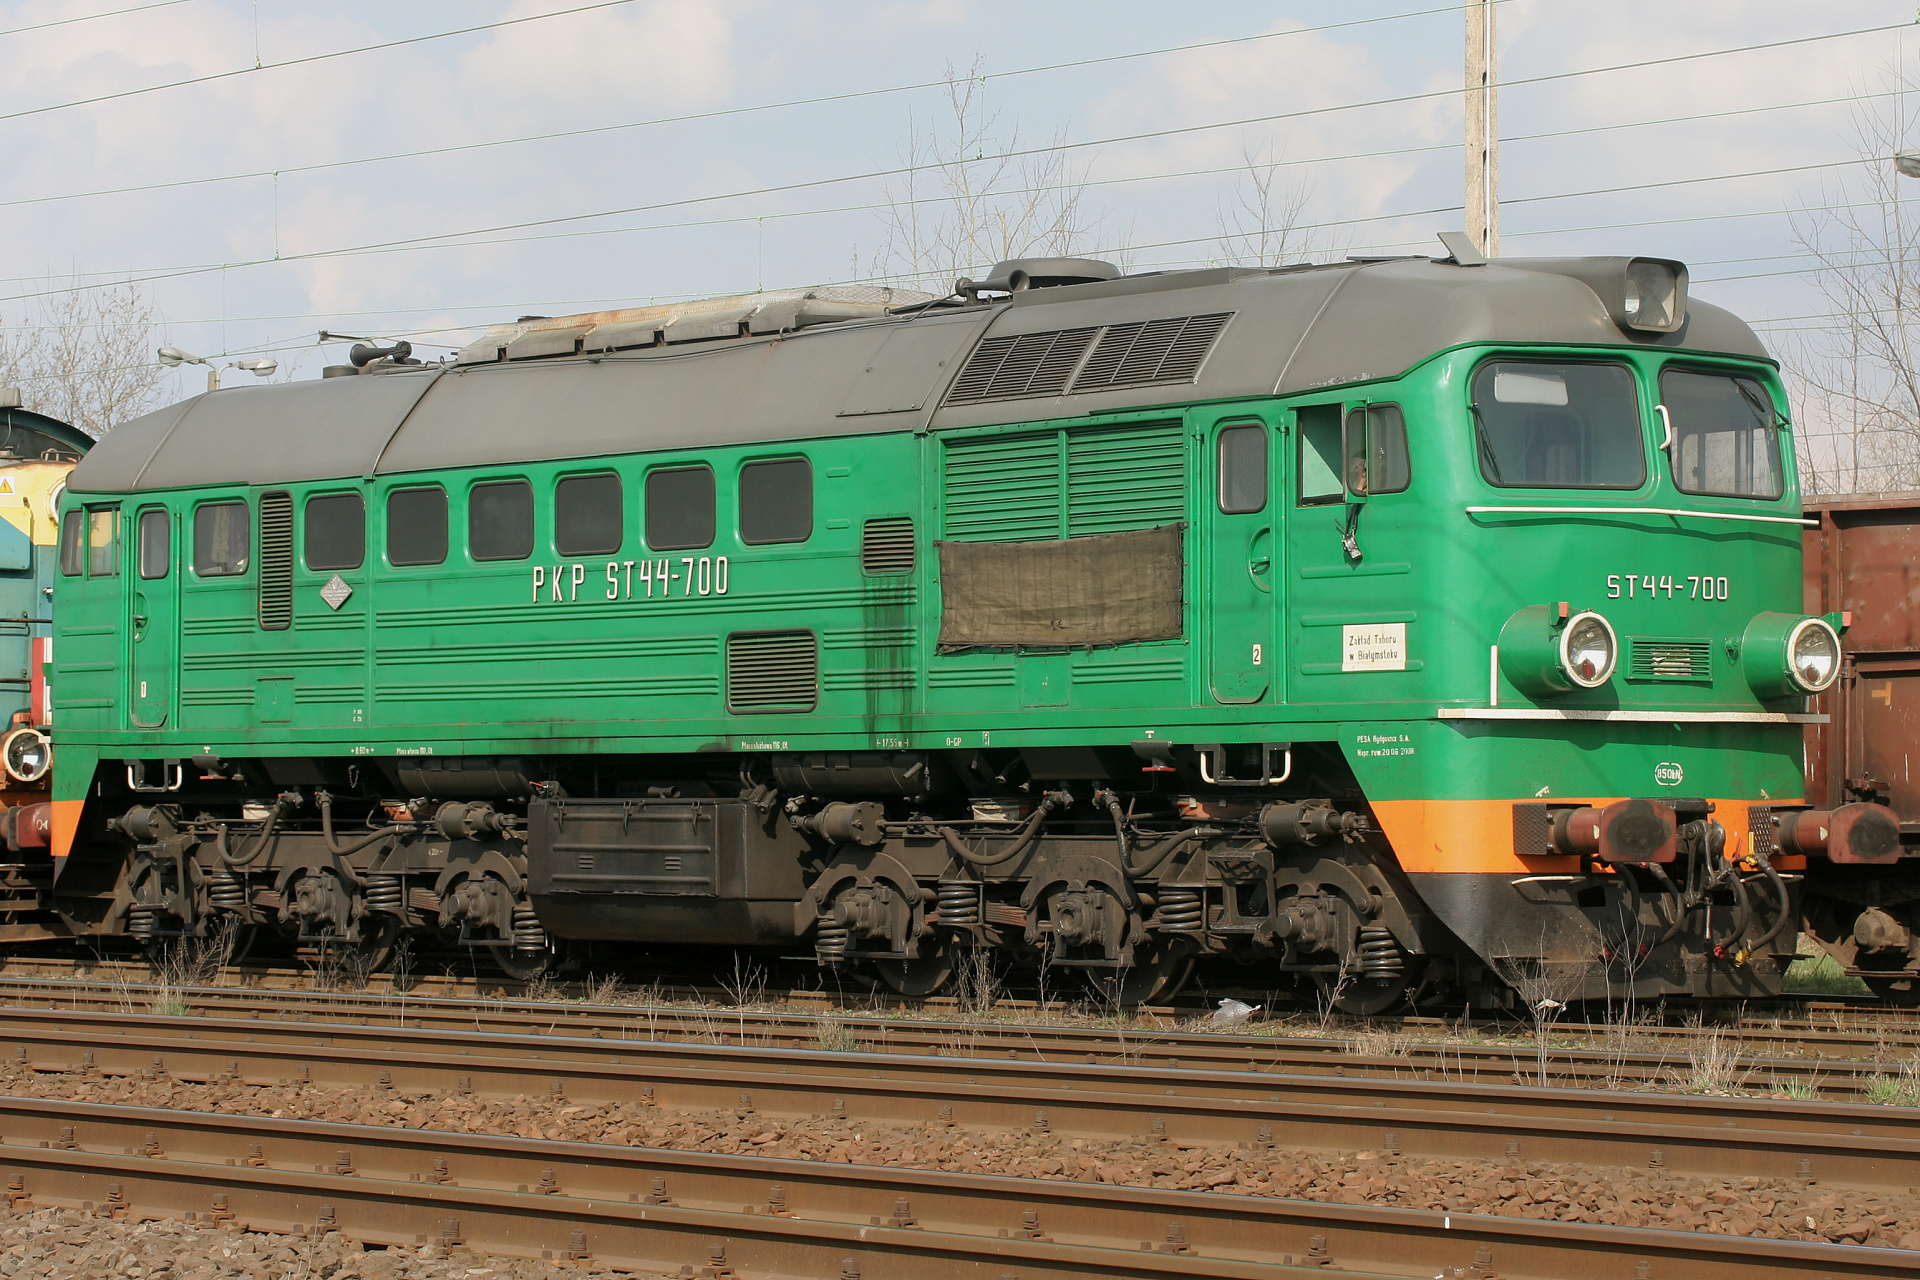 ST44-700 (Vehicles » Trains and Locomotives » ЛТЗ M62)